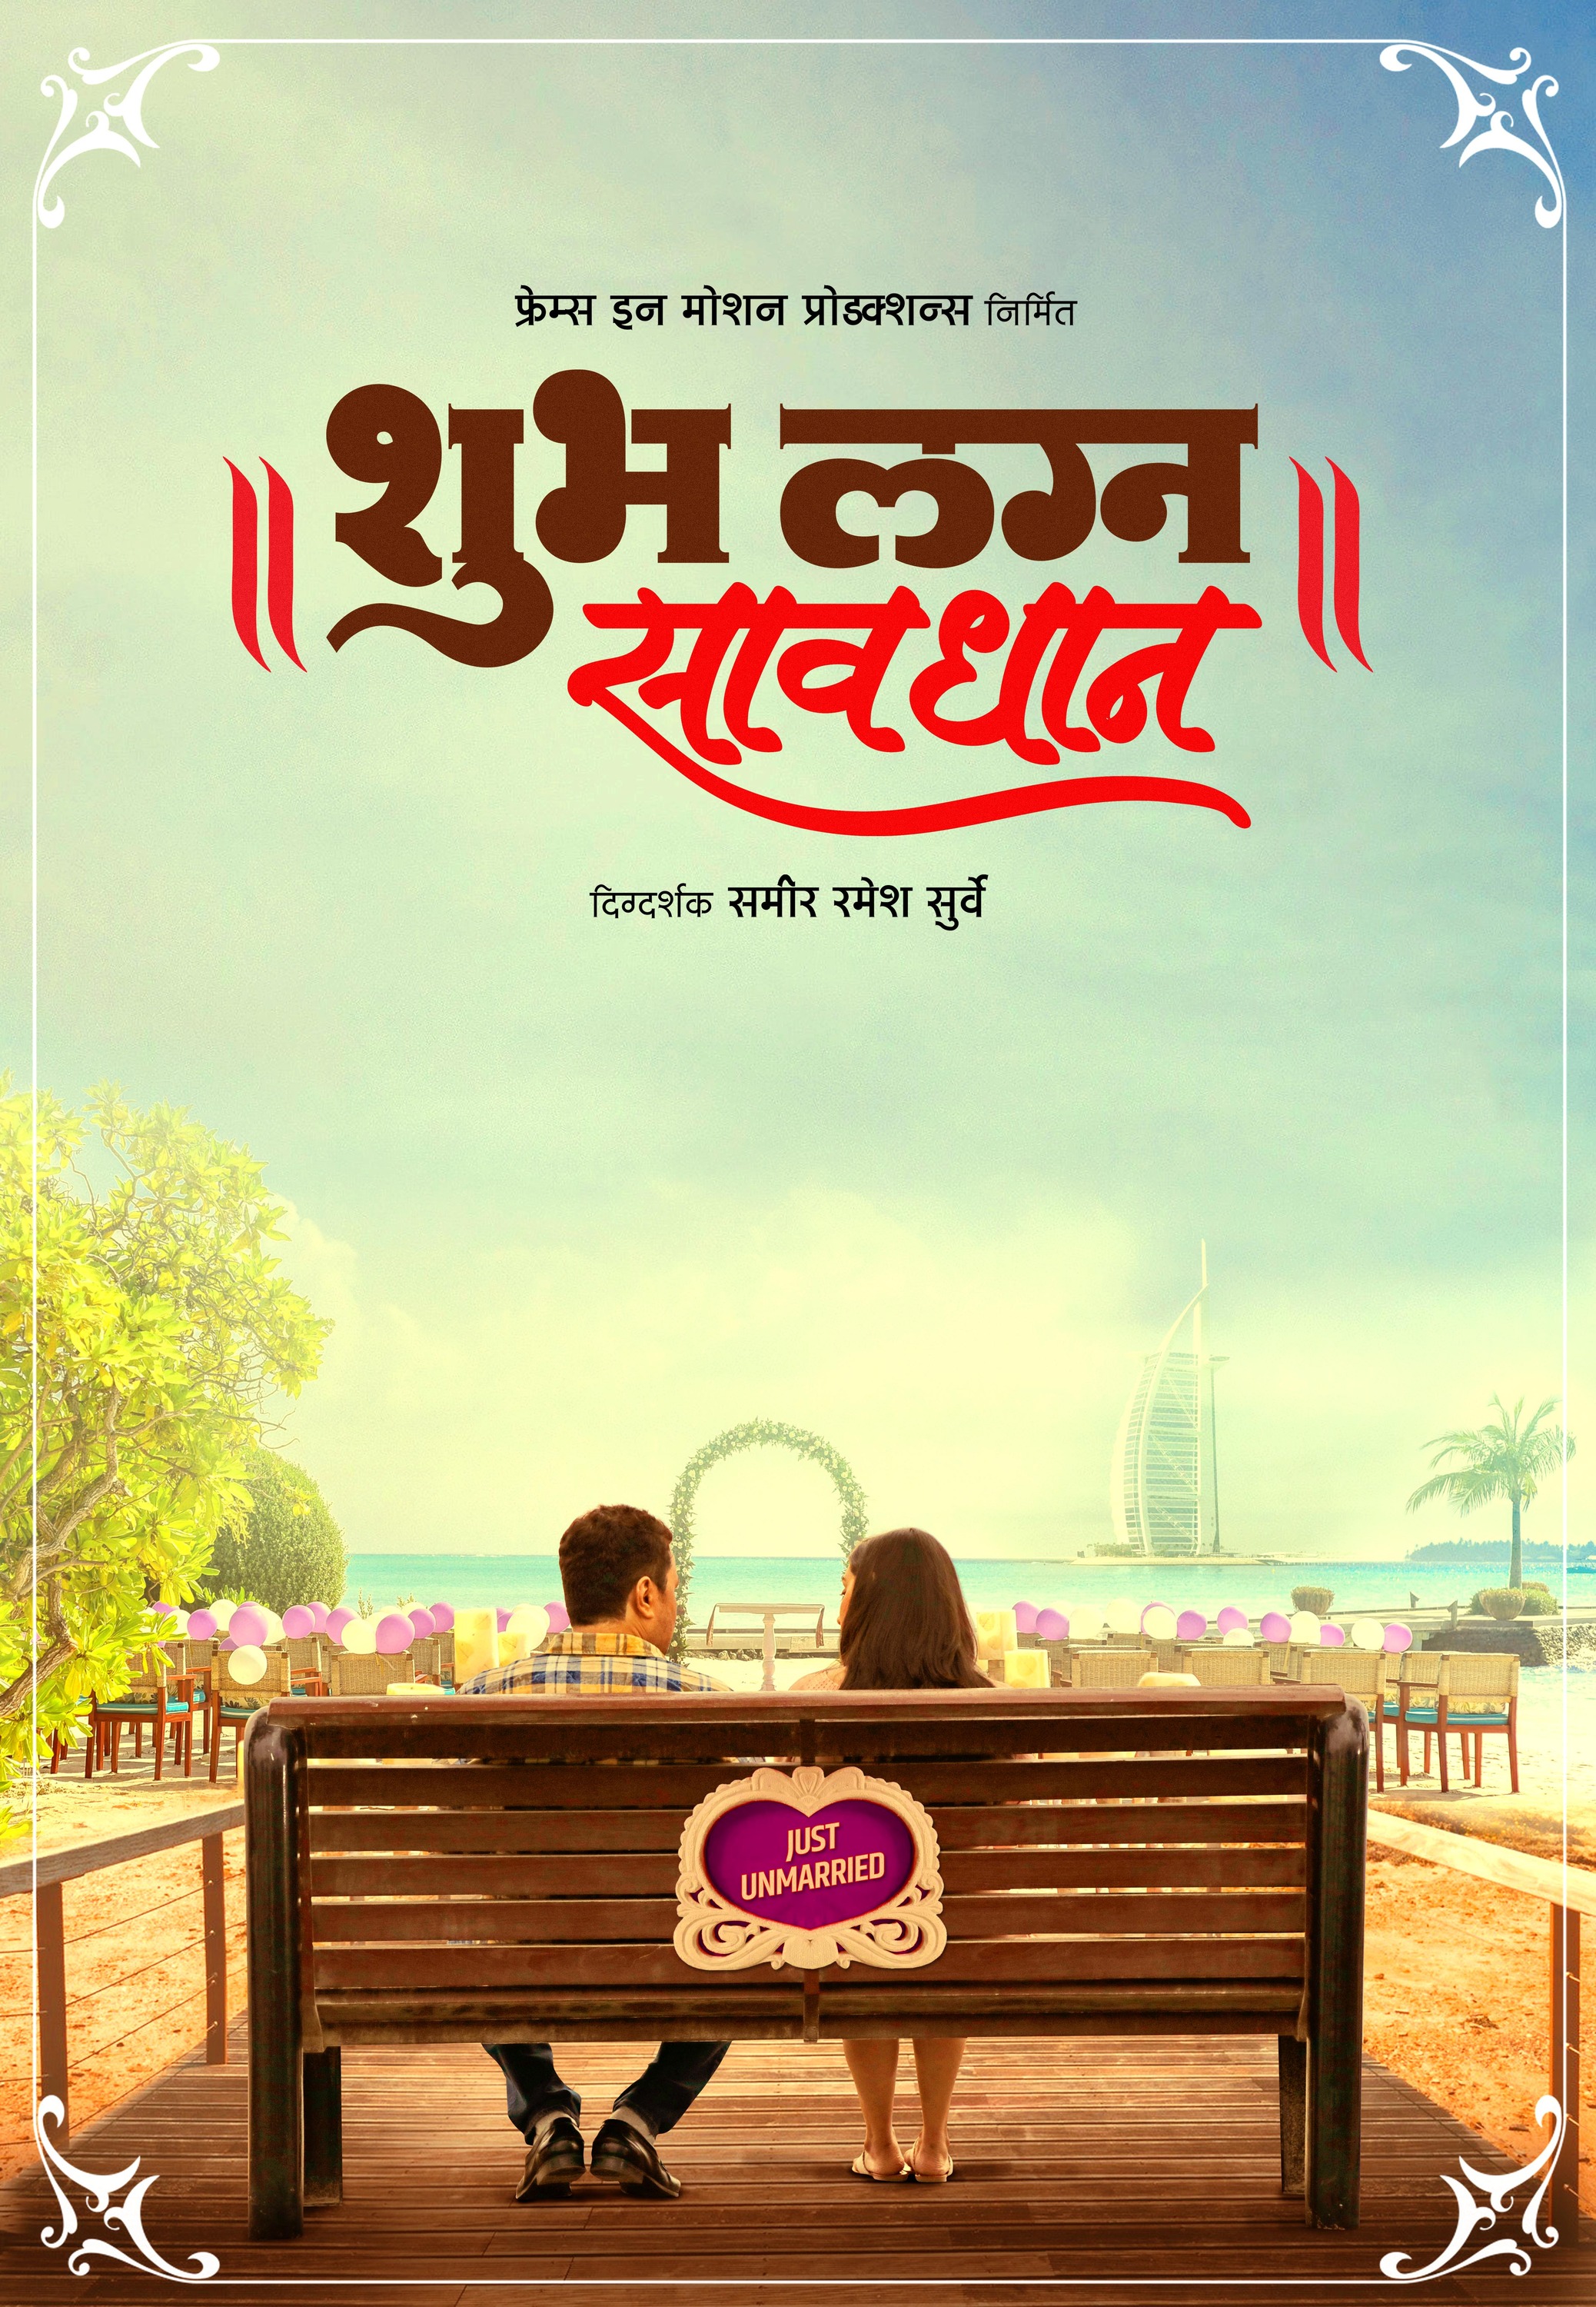 Mega Sized Movie Poster Image for Shubh Lagna Savdhan (#1 of 4)